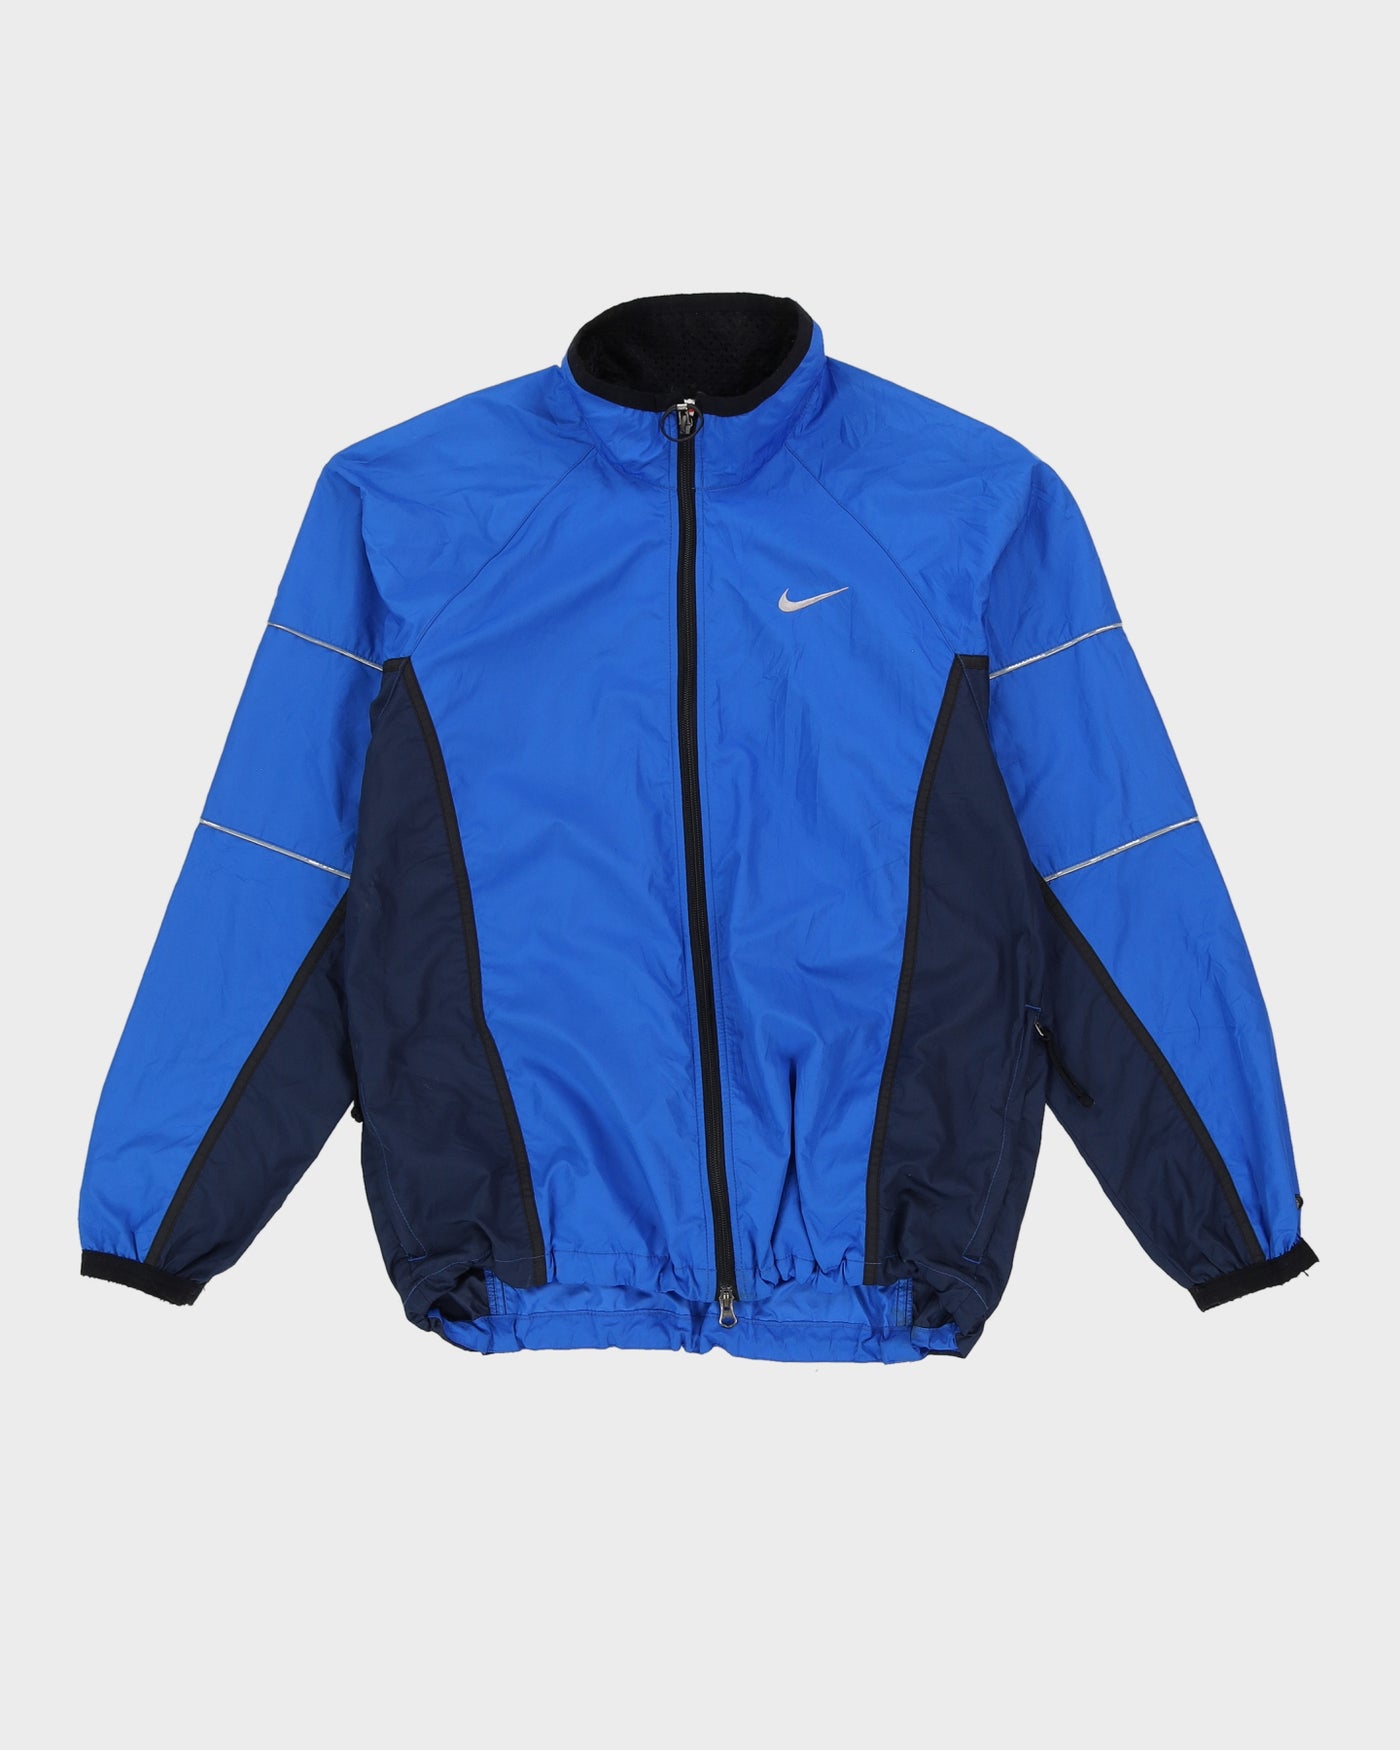 Vintage 90s Nike Blue Windbreaker Jacket - S